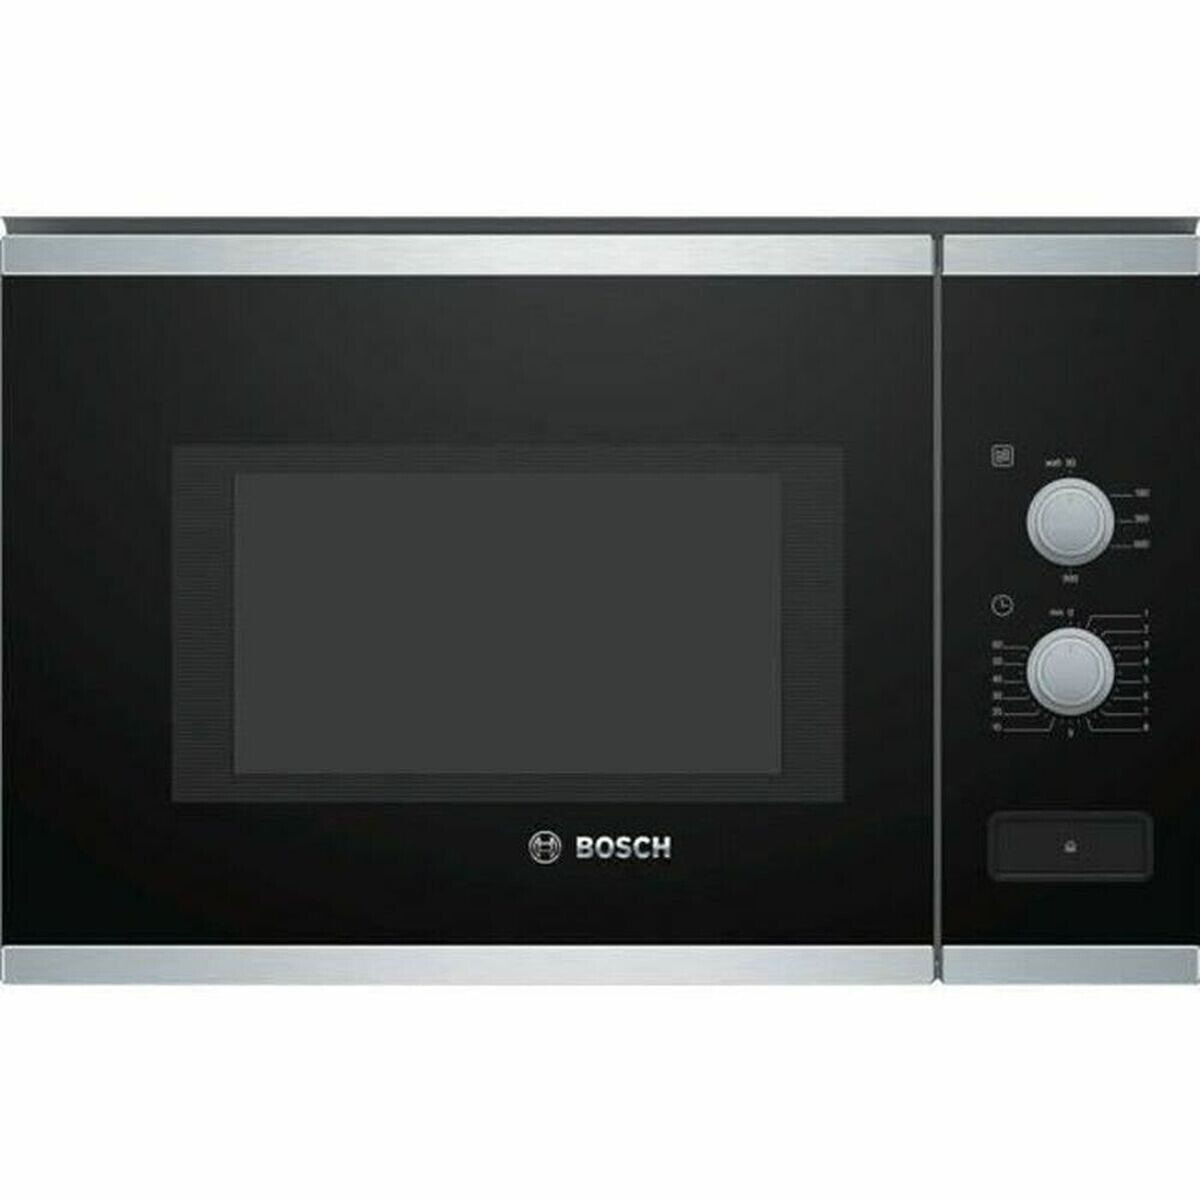 Microwave BOSCH BFL550MS0 25 L Black/Silver 900 W 25 L